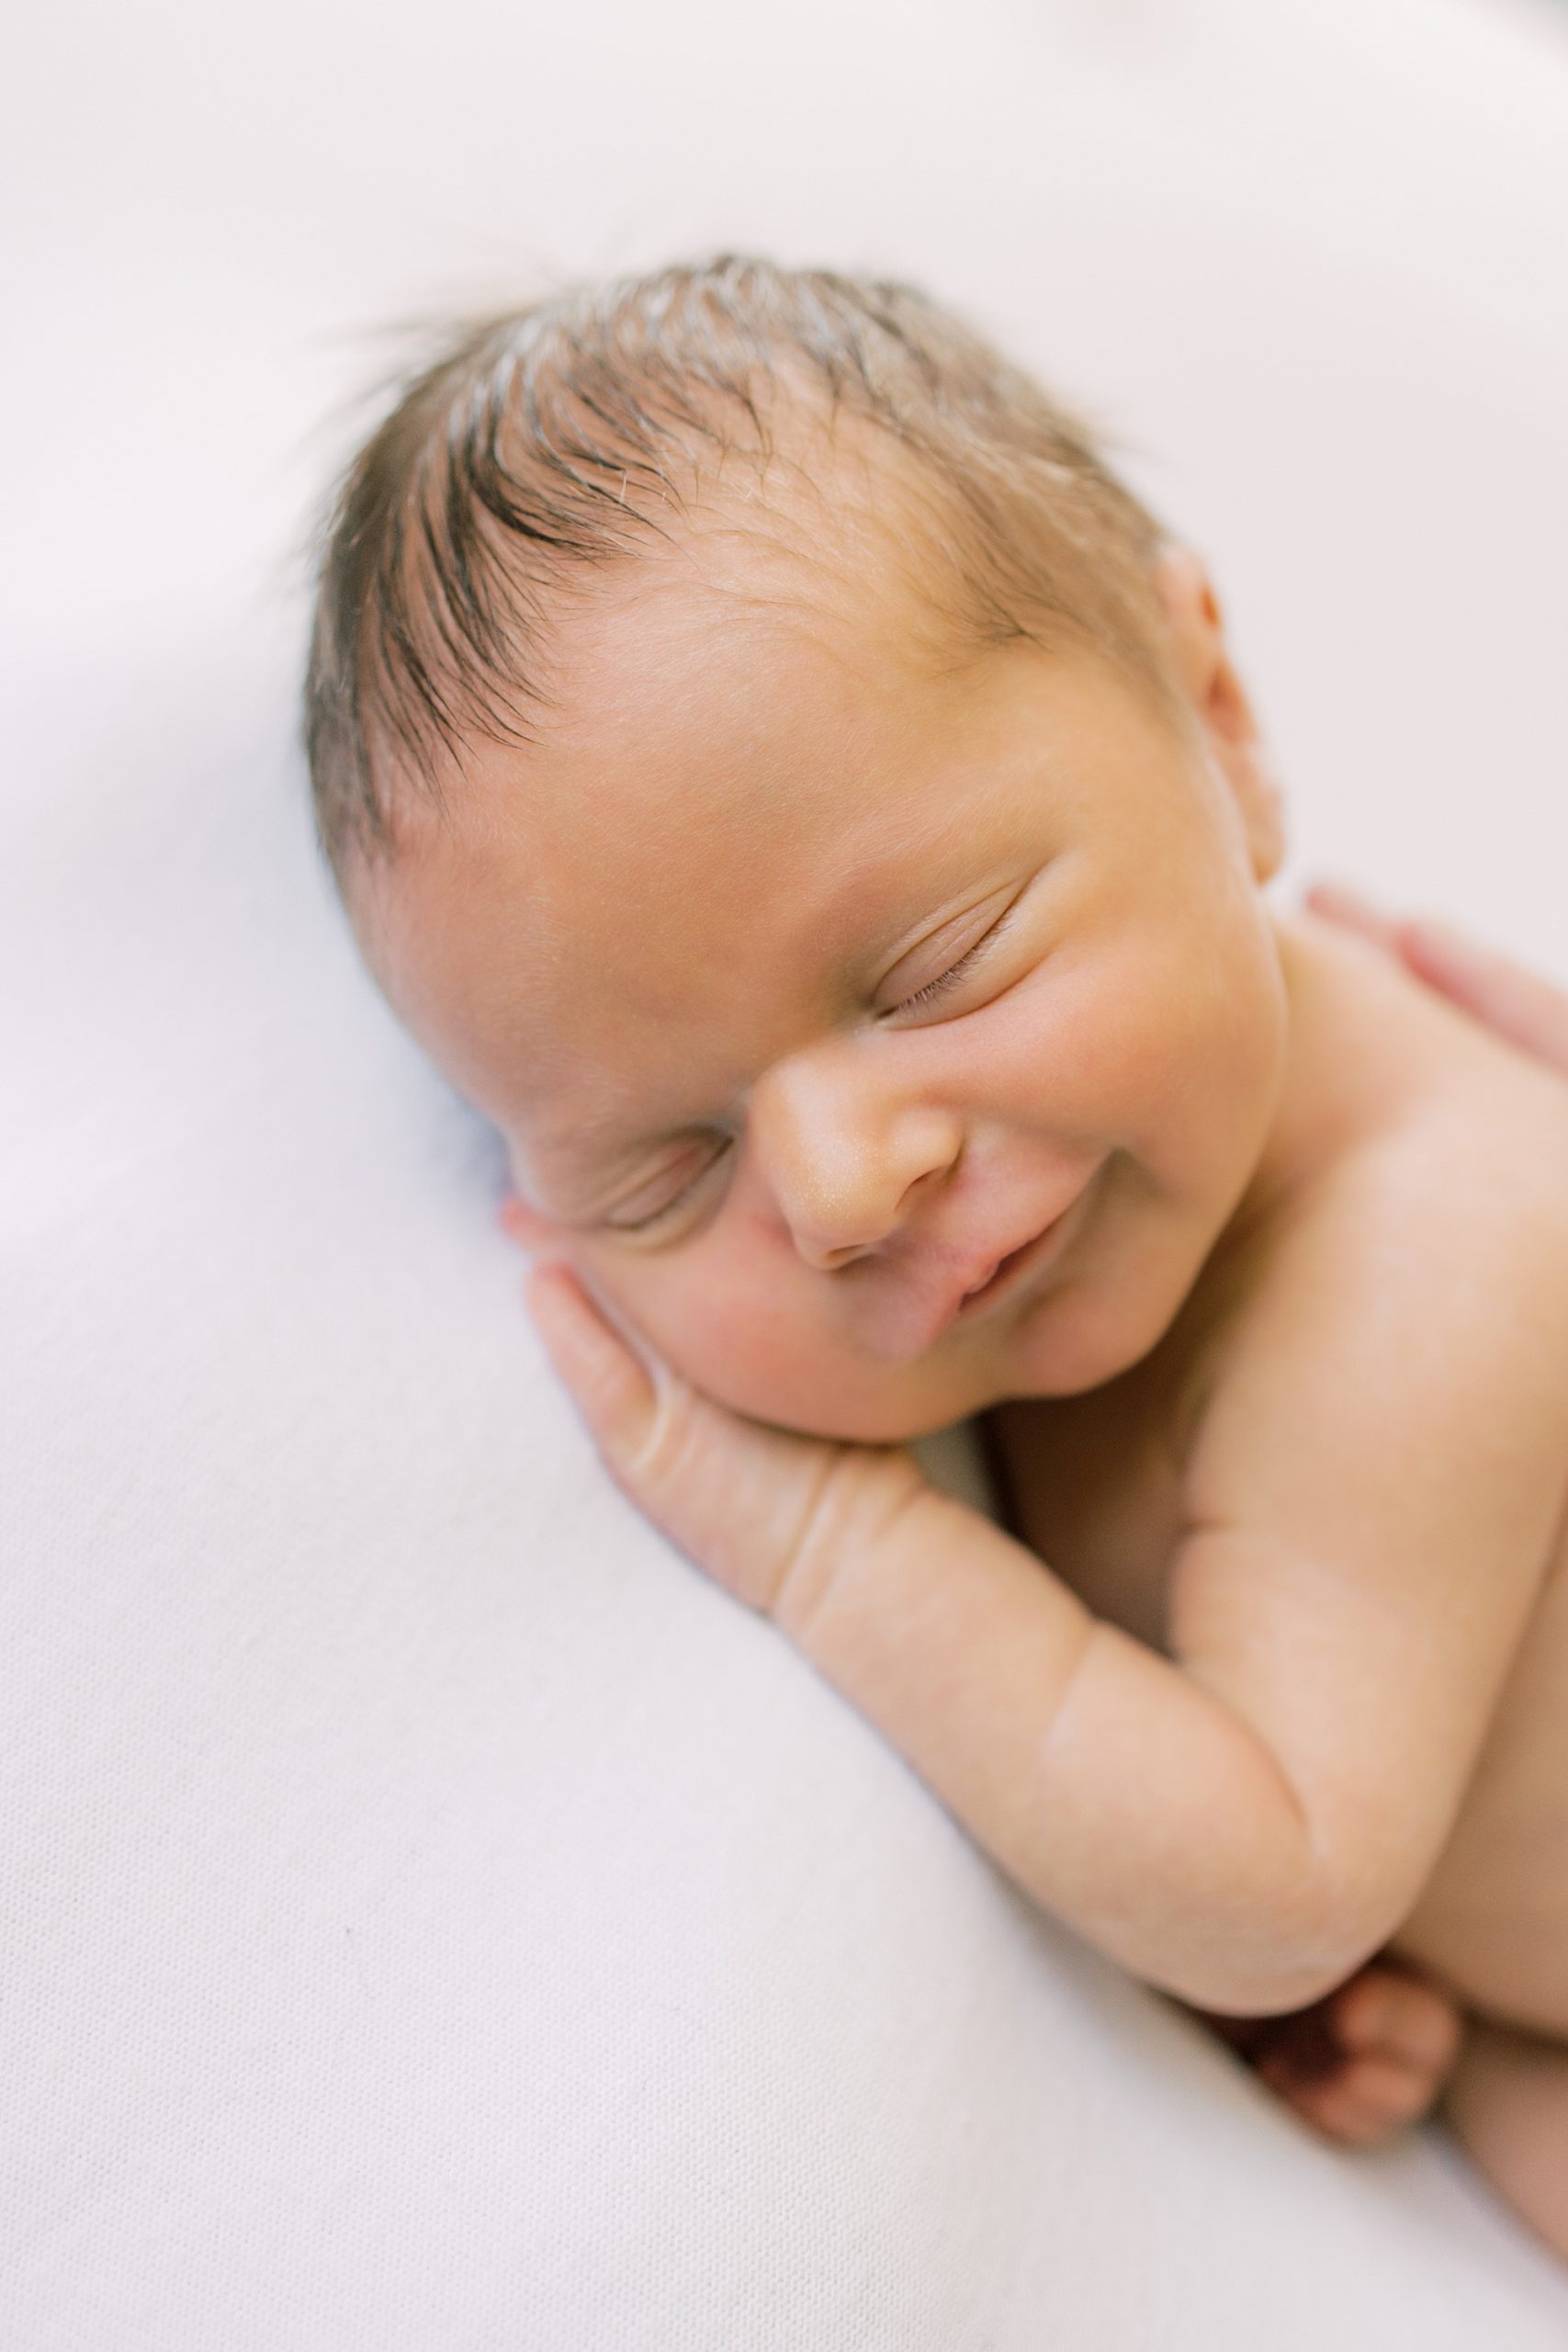 Fine Art Newborn Photography close up image of sleeping newborn baby by Philadelphia Photographer Samantha Jay